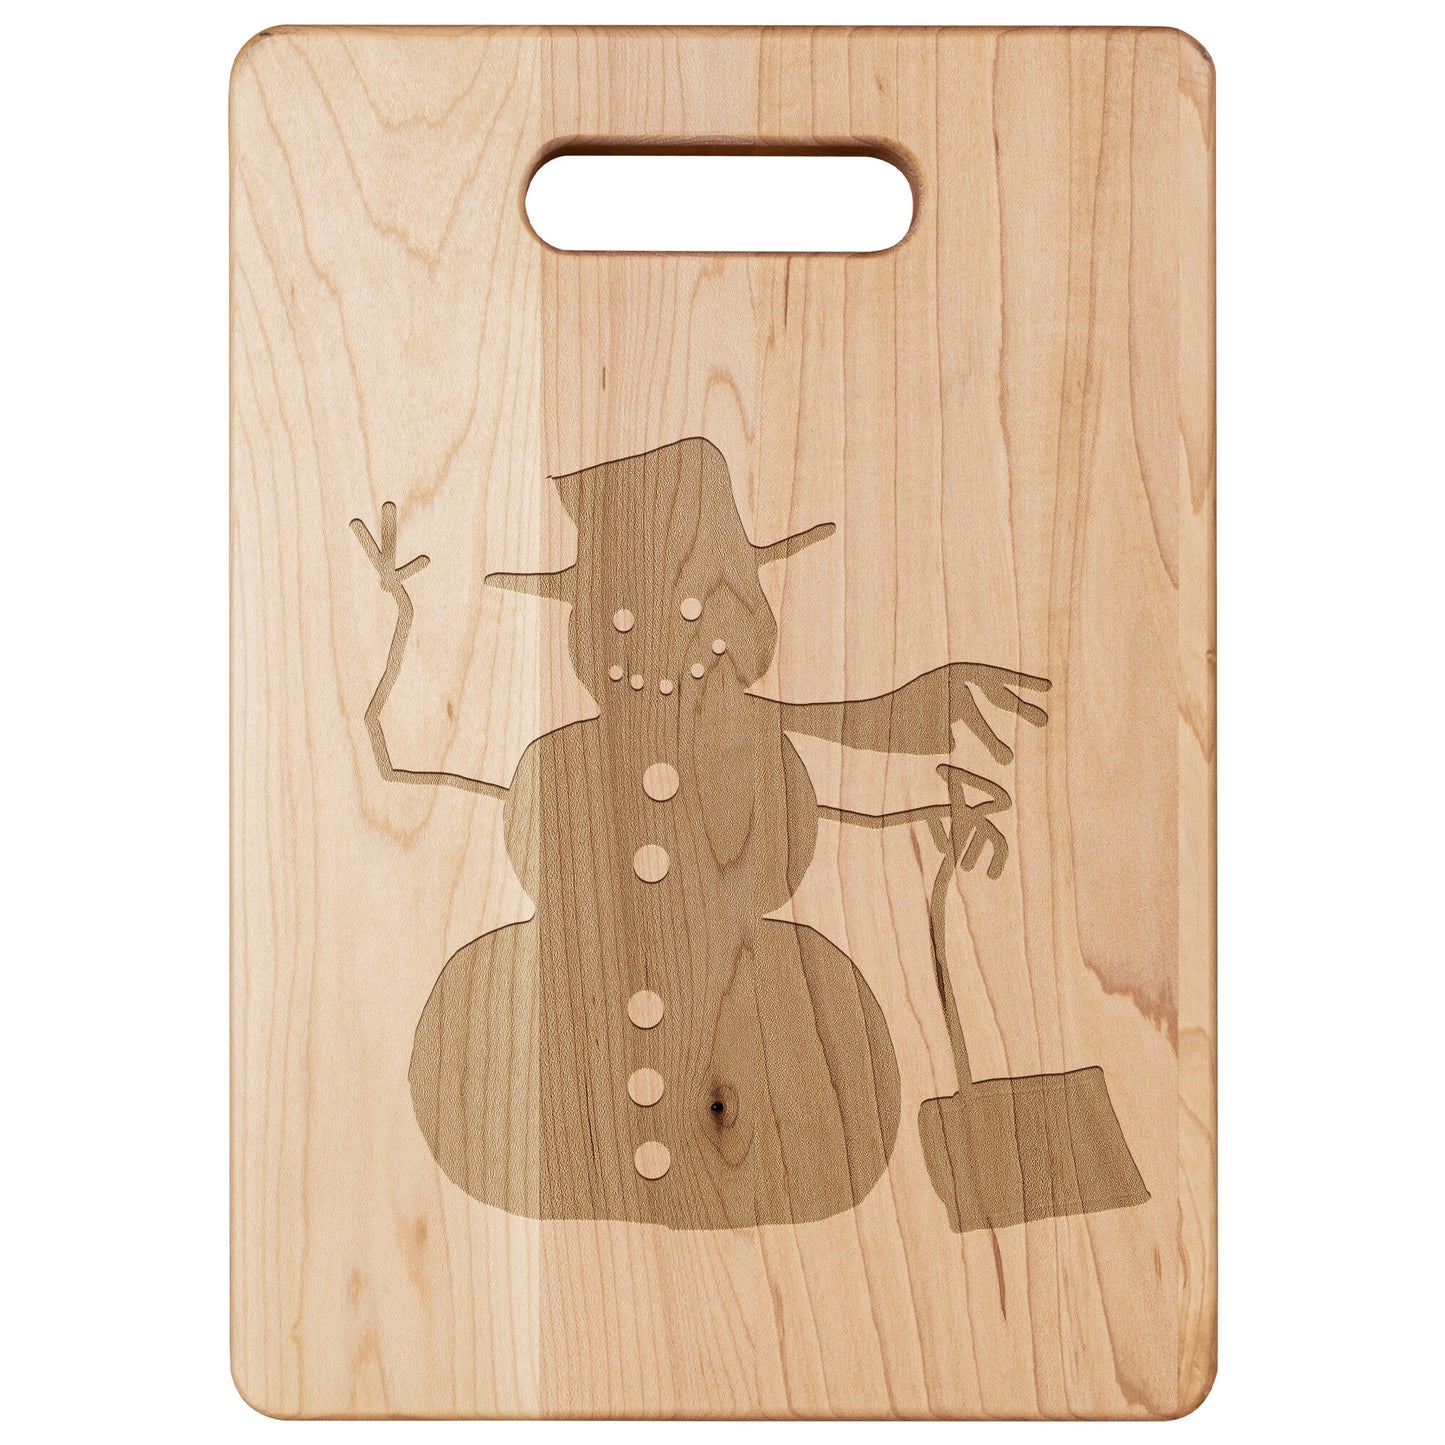 Waving Snowman Maple Cutting Board